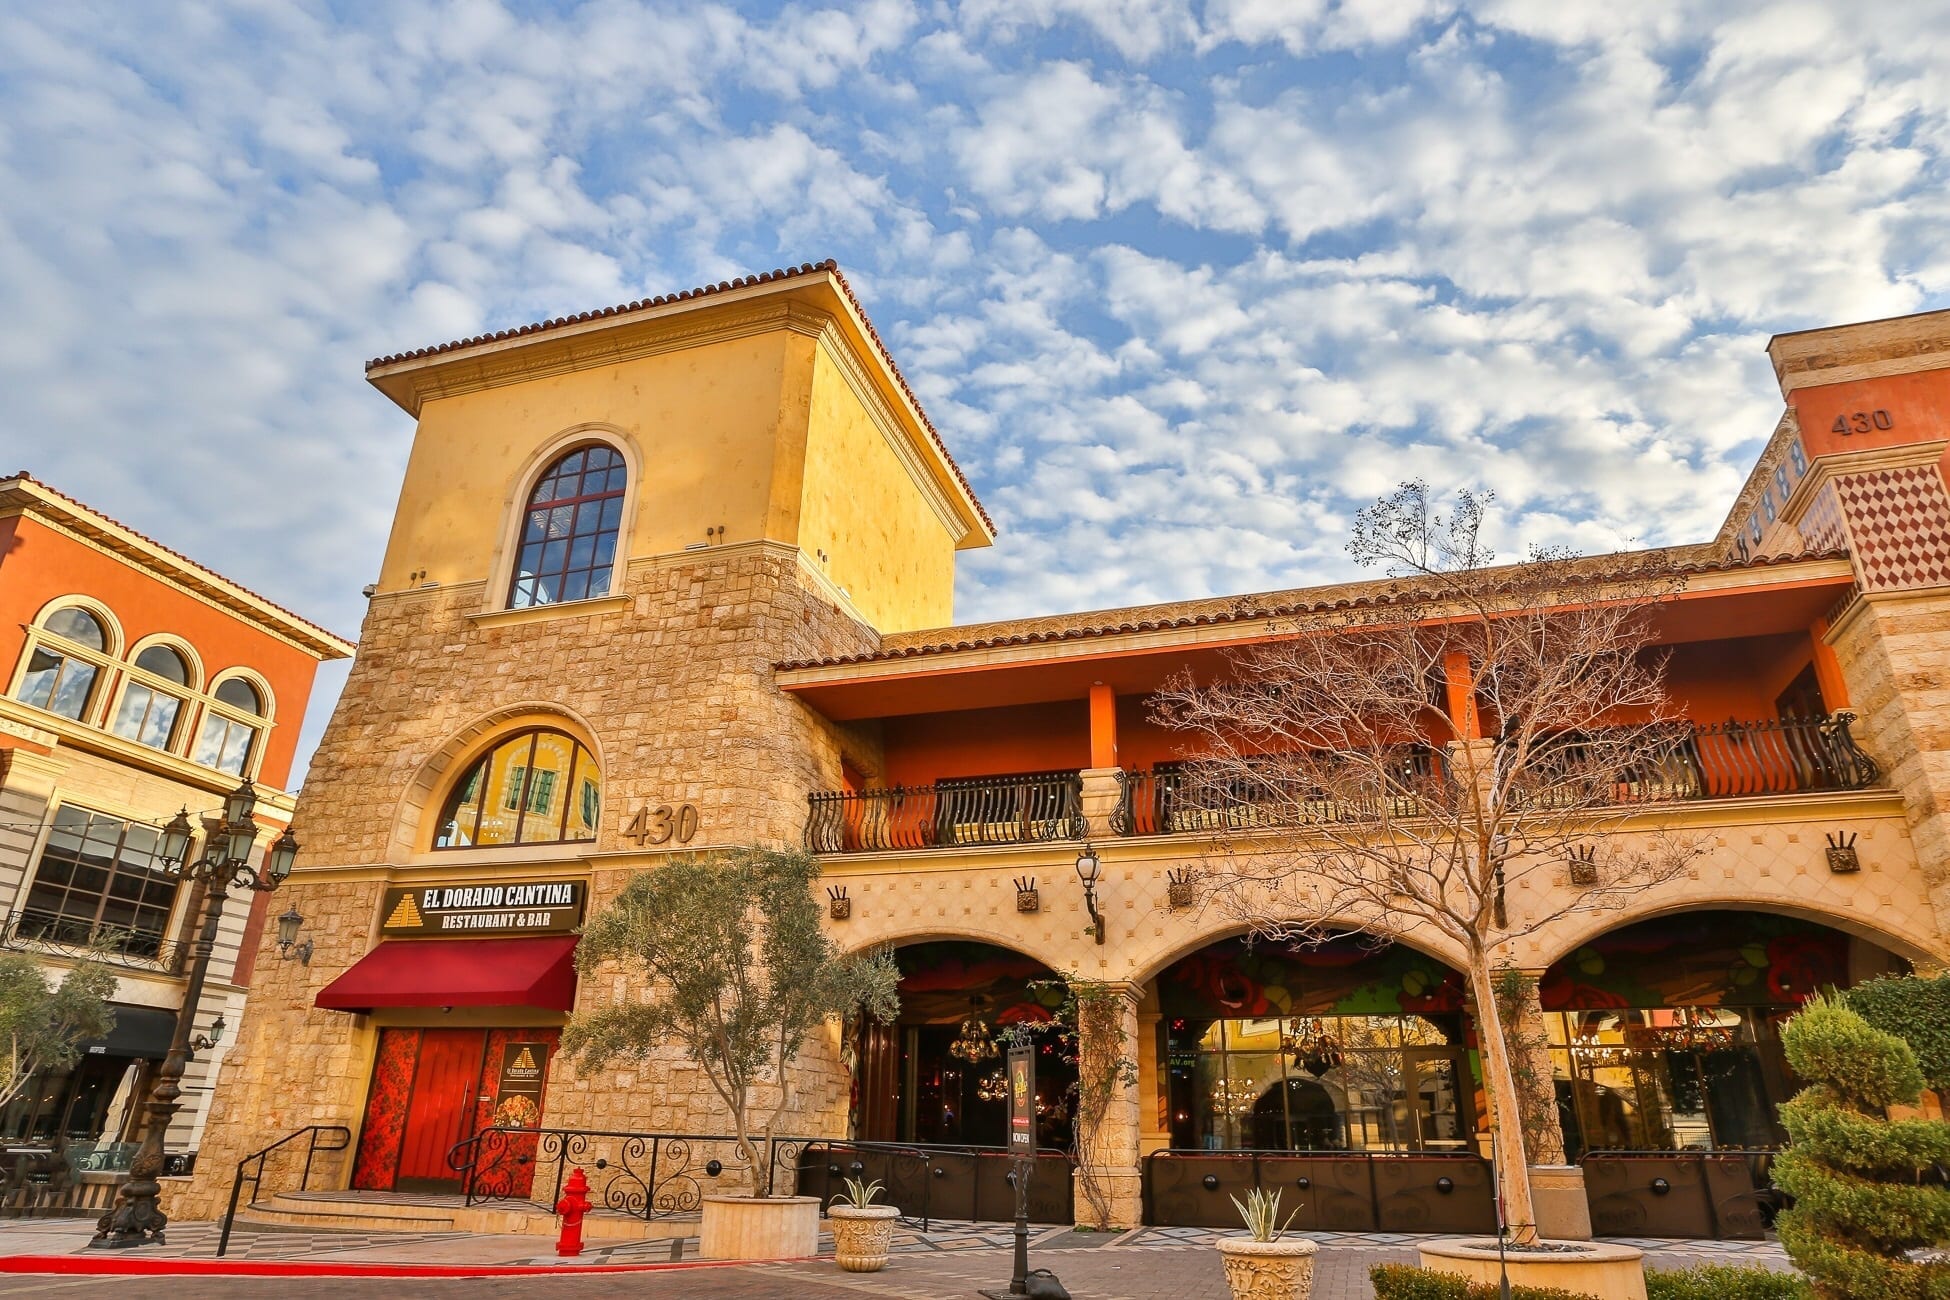 El Dorado Cantina at Tivoli Village